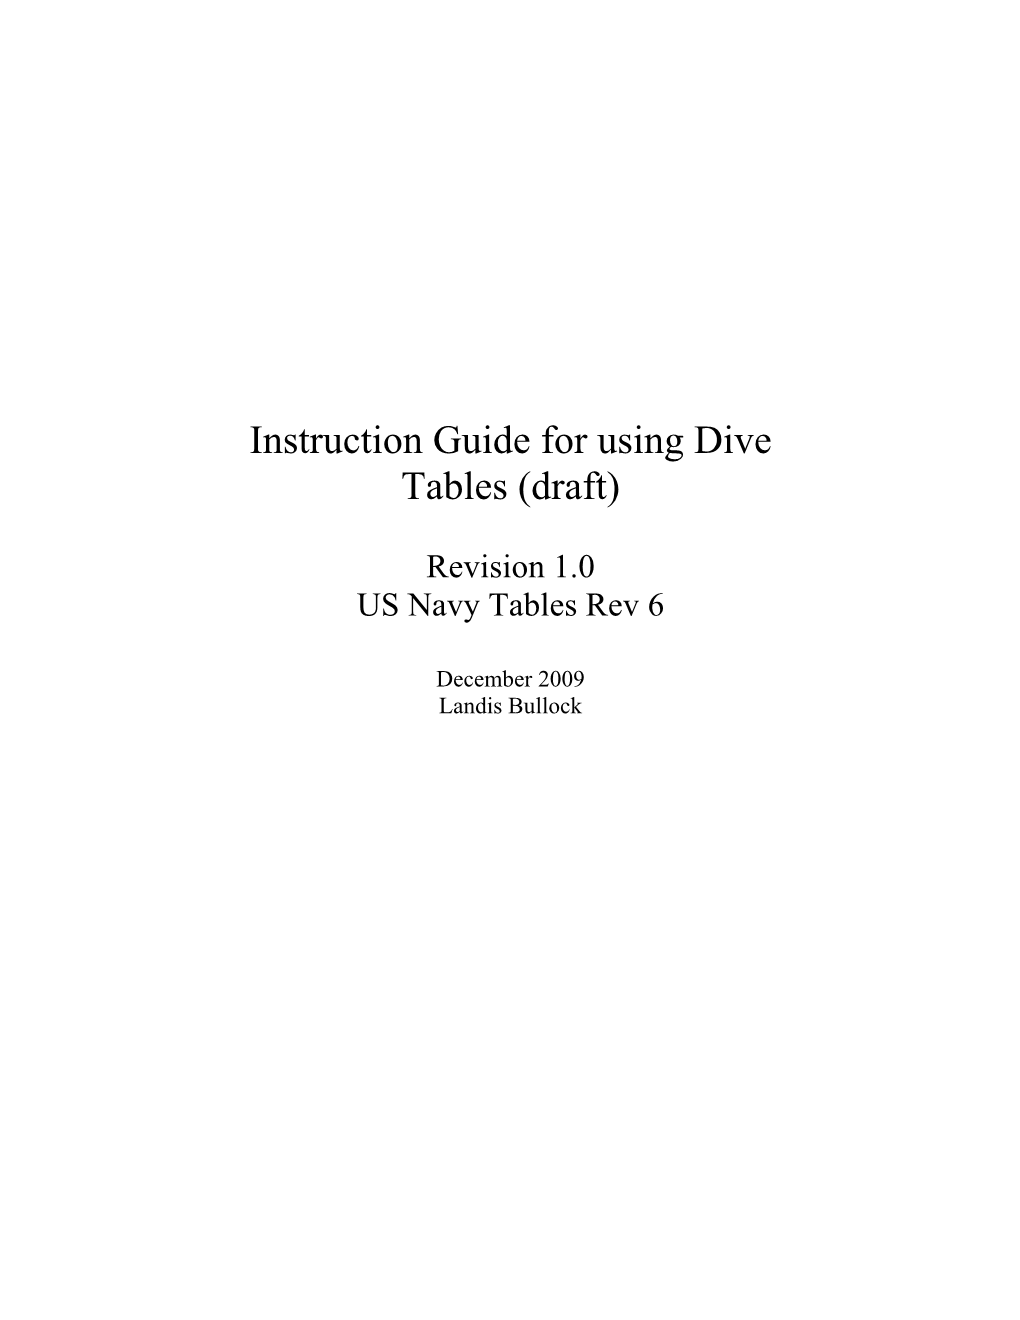 US Navy Dive Tables) – P